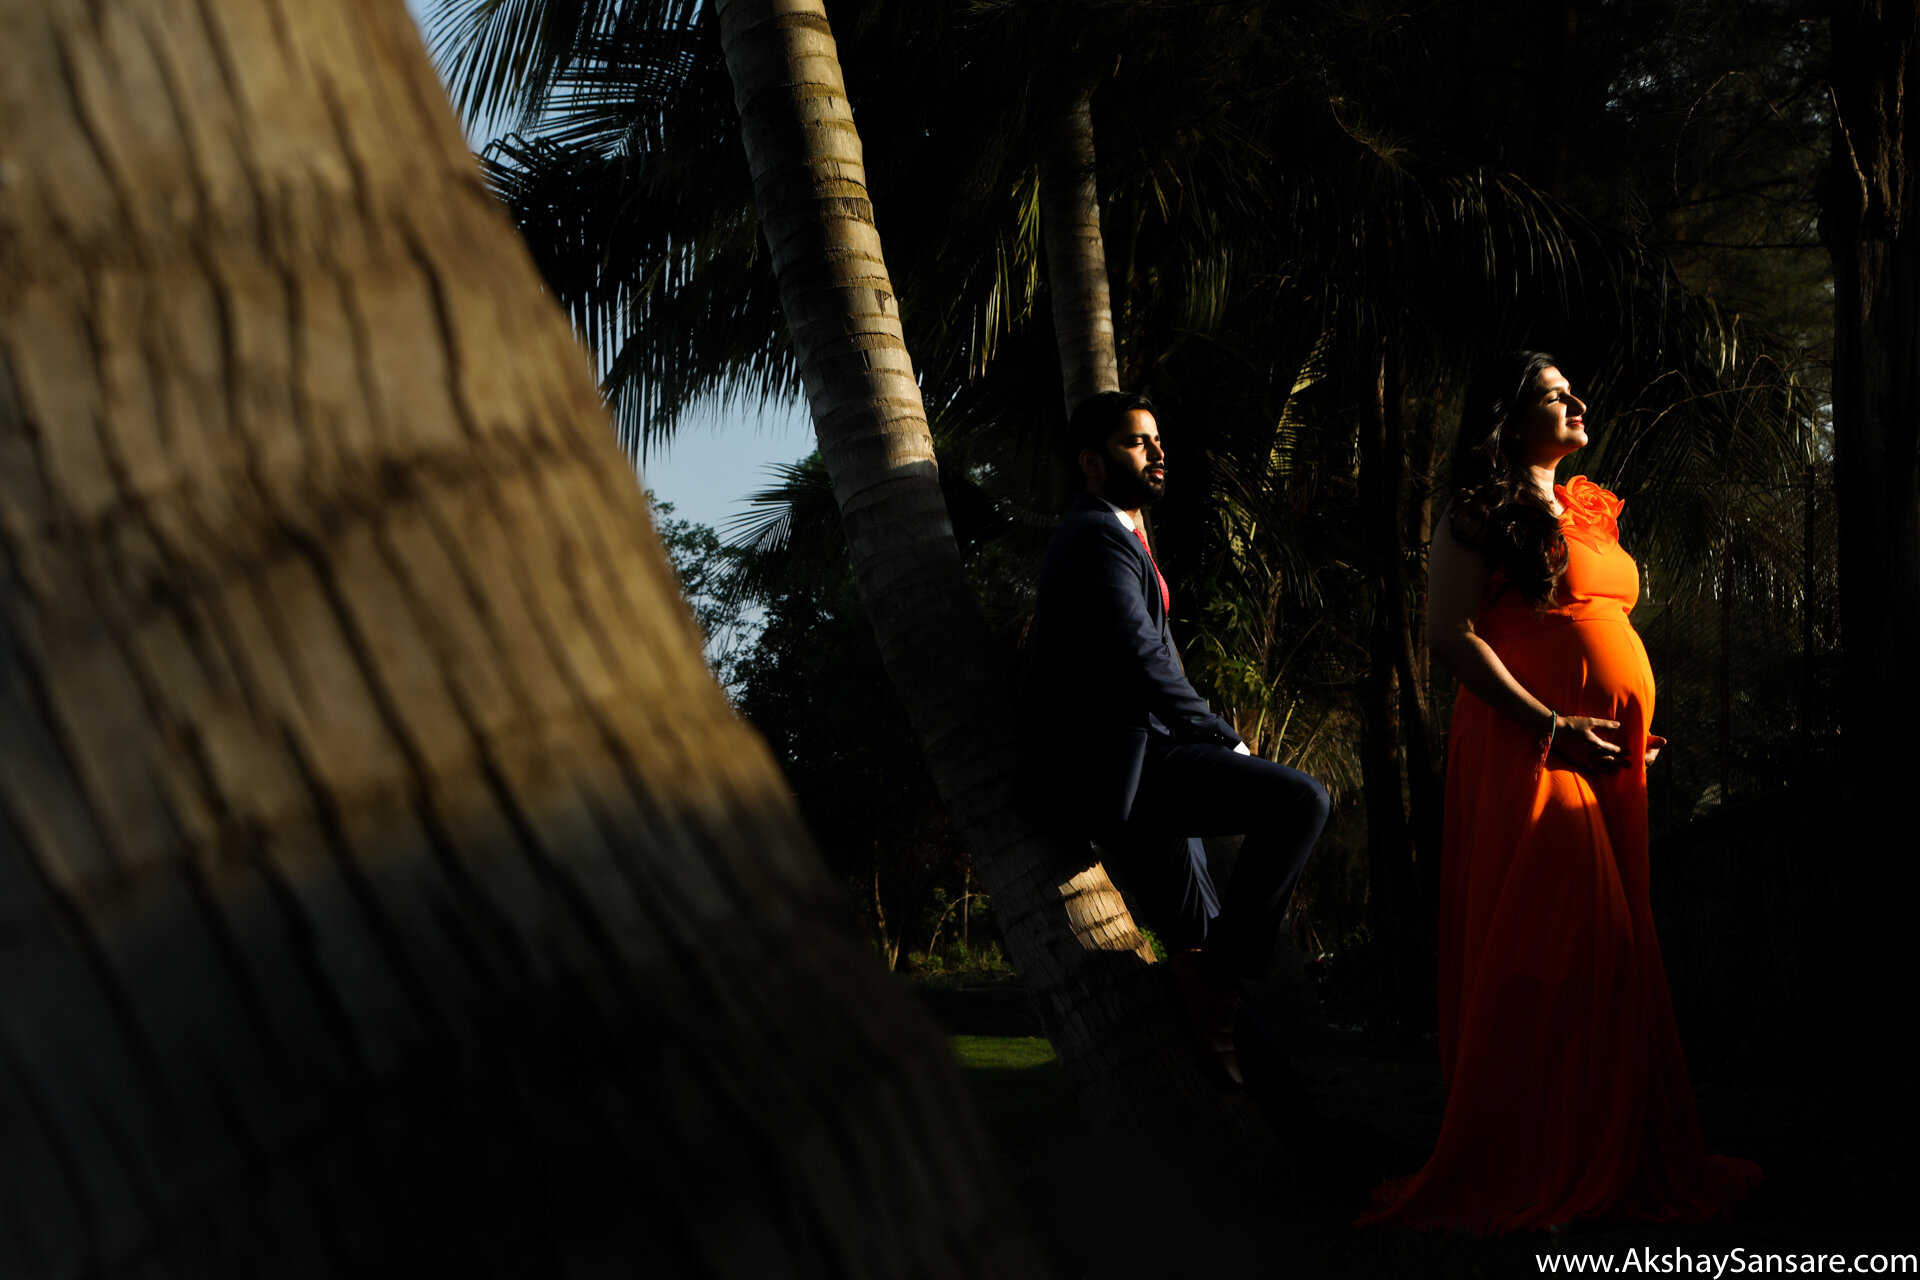 Anuj x Malvika + 1 Akshay Sansare Photography & Films Candid Photographer Best in mumbai Cinematic wedding films-19.jpg